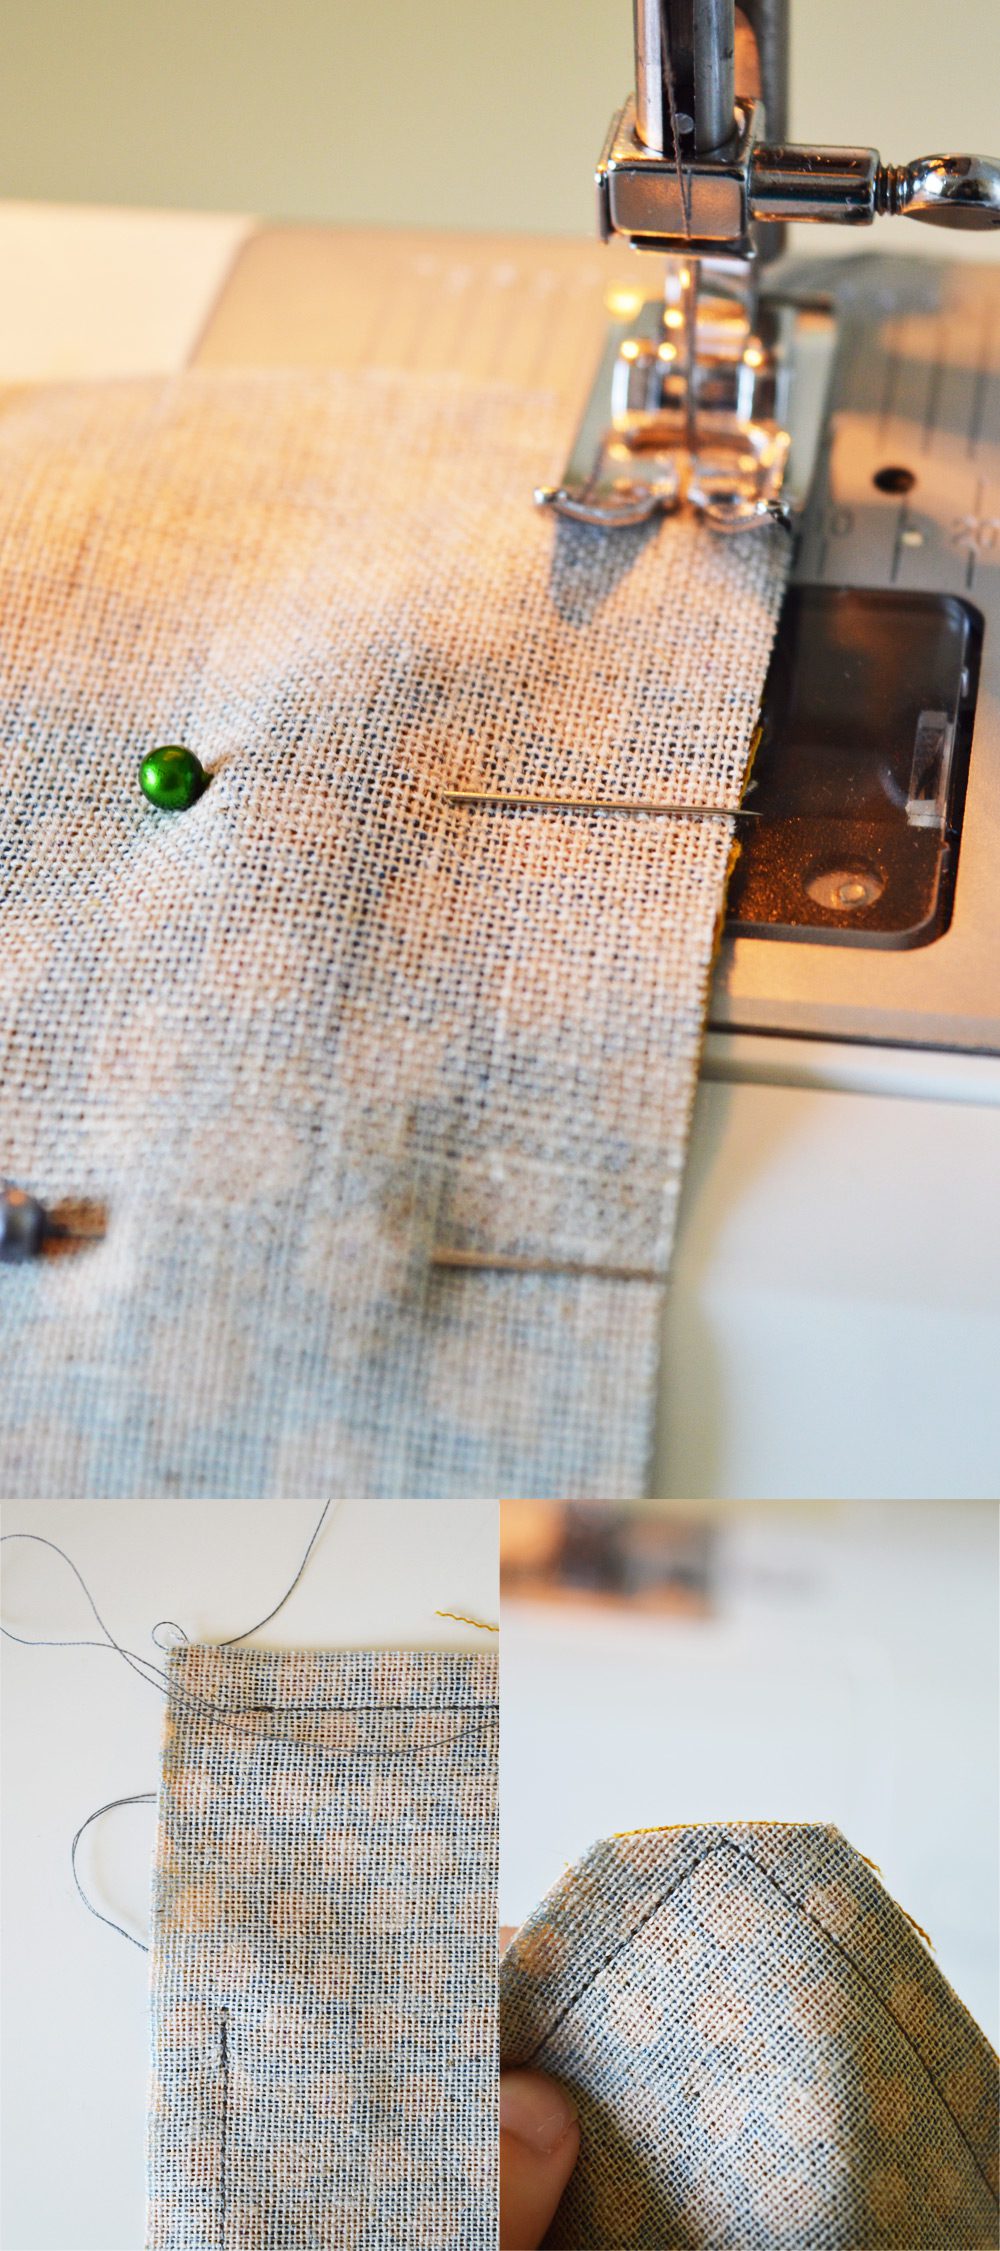 Fabric + #crochet clutch tutorial #sewing